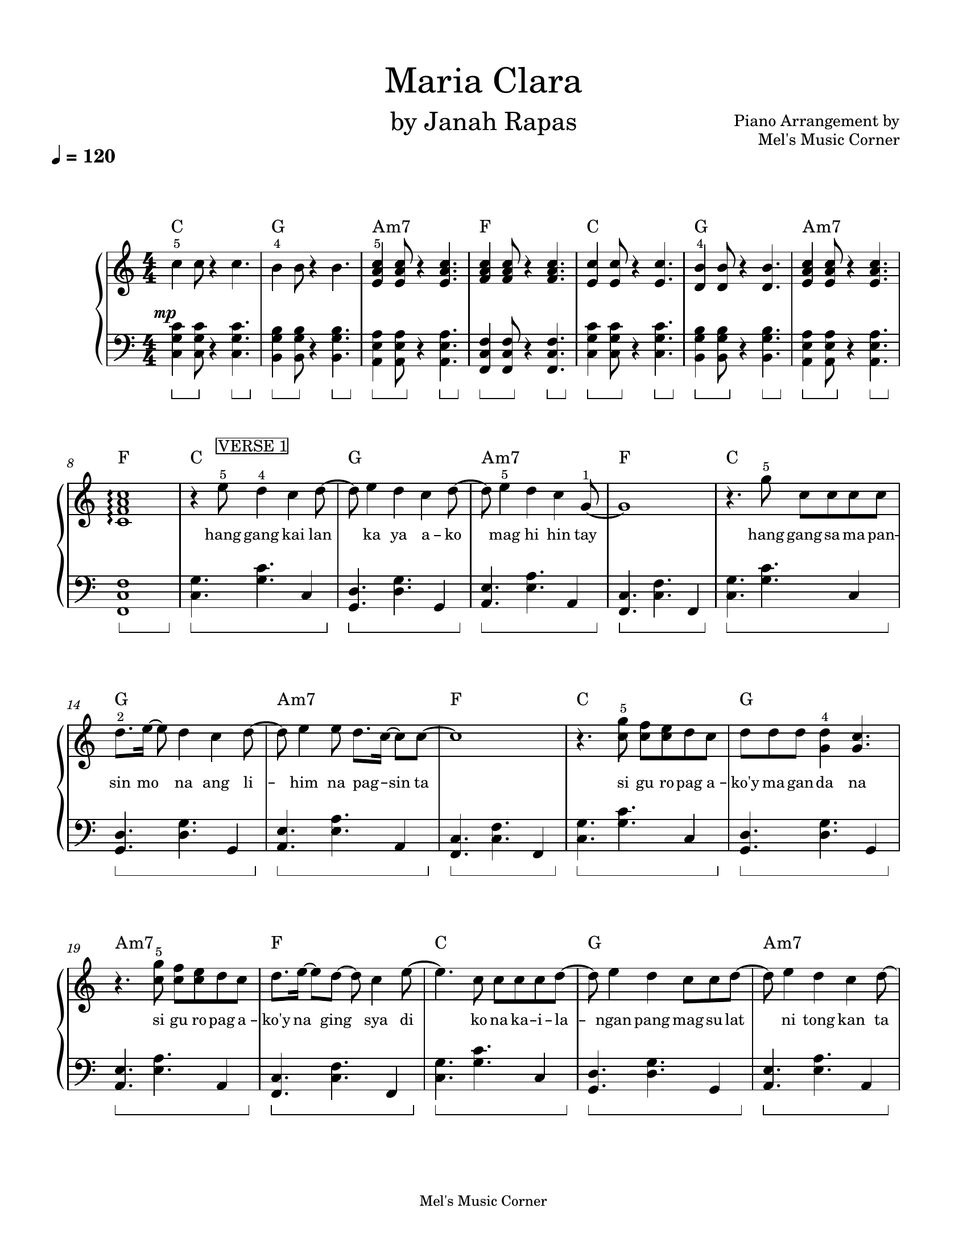 Janah Rapas - Maria Clara (piano sheet music) by Mel's Music Corner